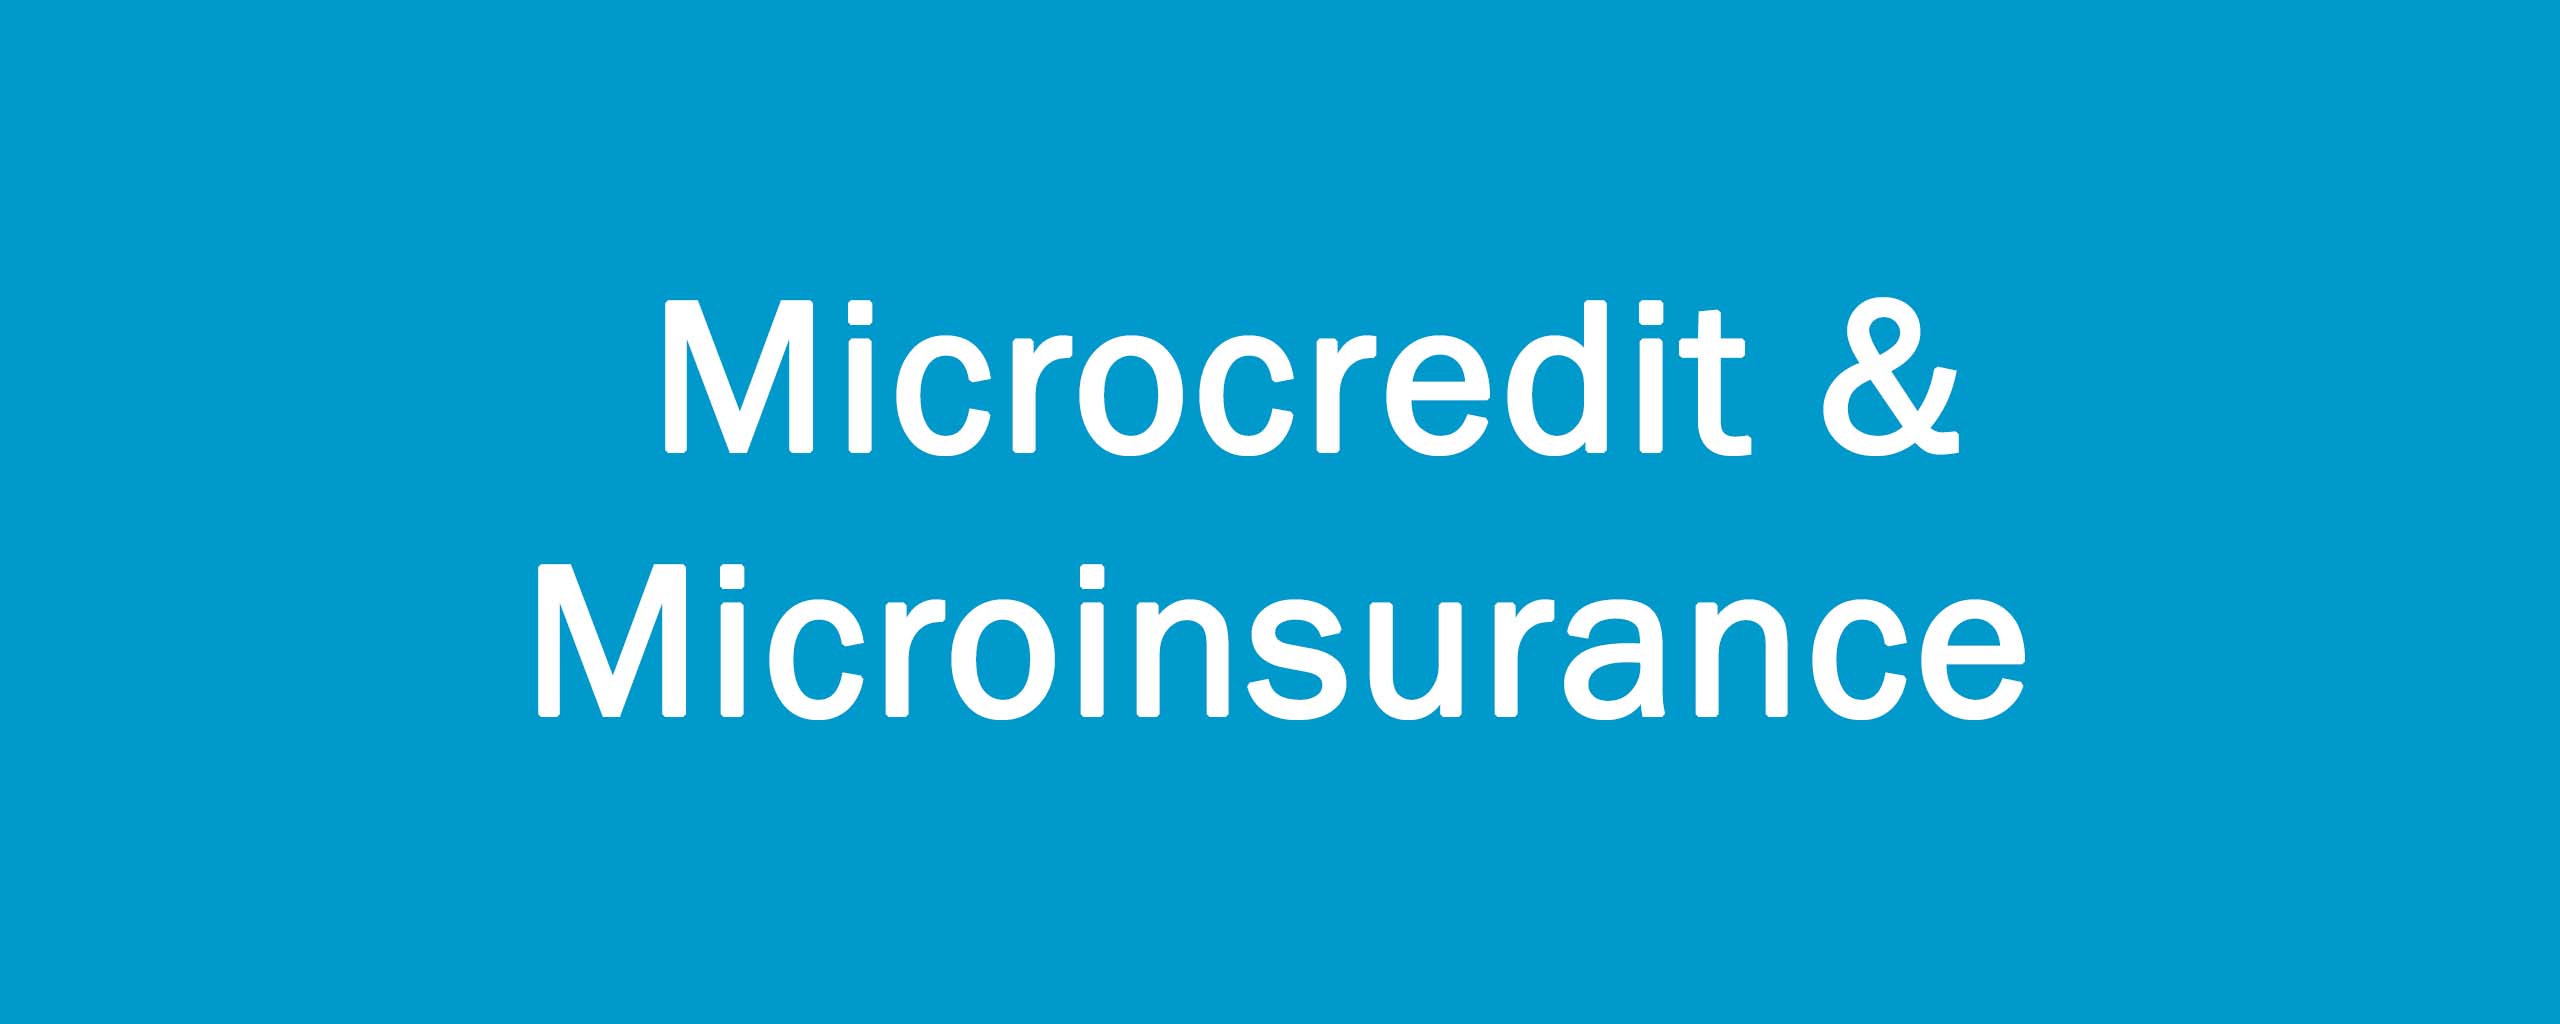 Microcredit & Microinsurance 